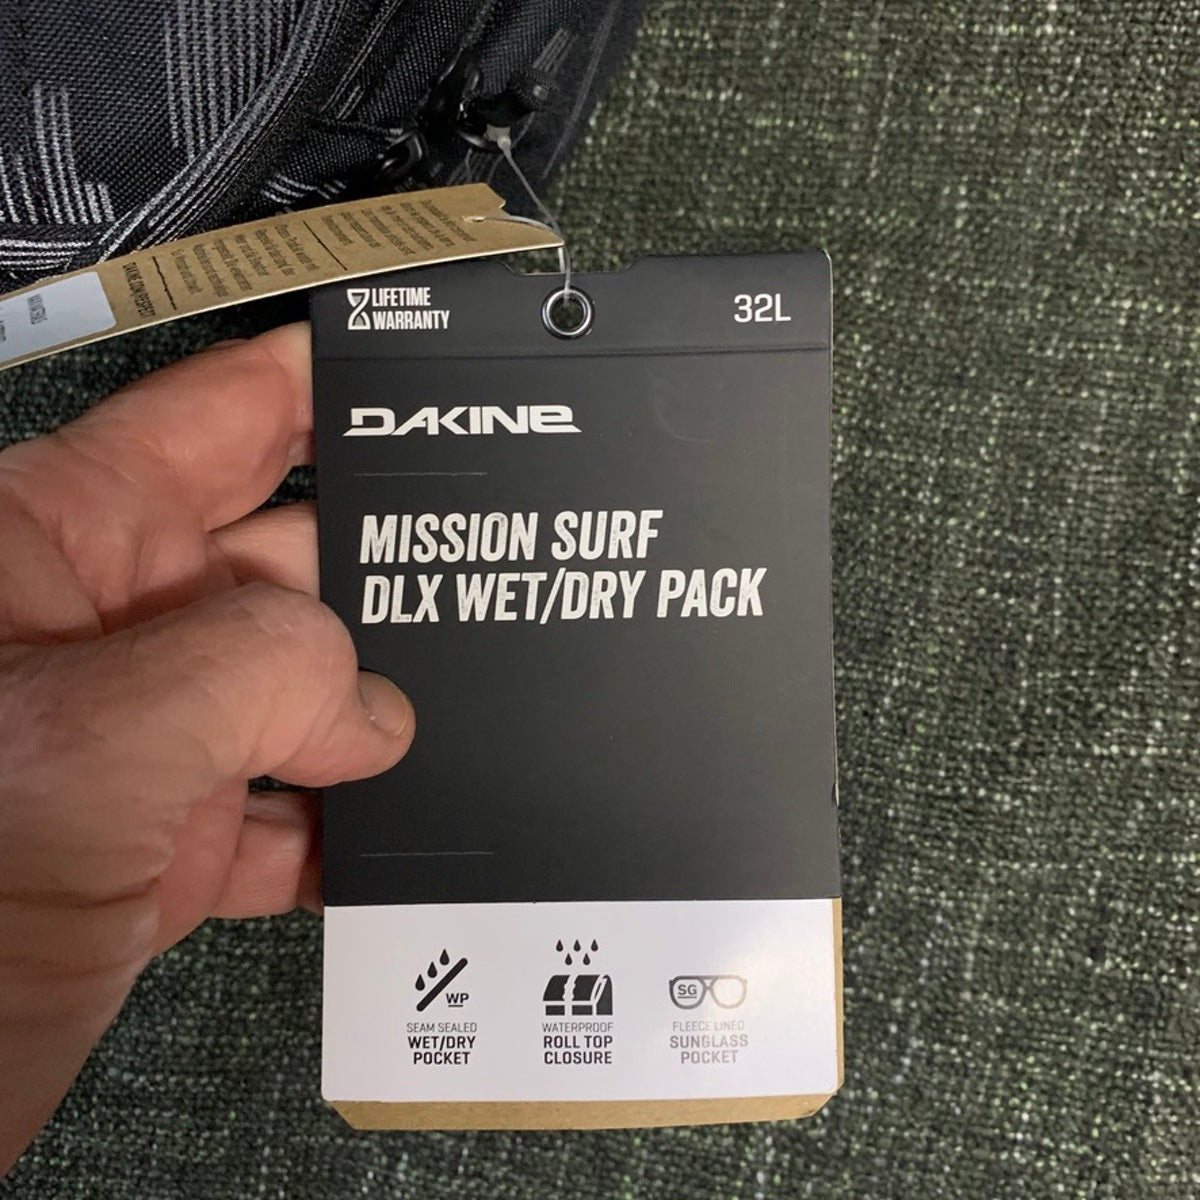 
                  
                    Travel Luggage - Dakine Backpack Mission Surf Dlx Wet/Dry Pack 32L Flash Reflective
                  
                